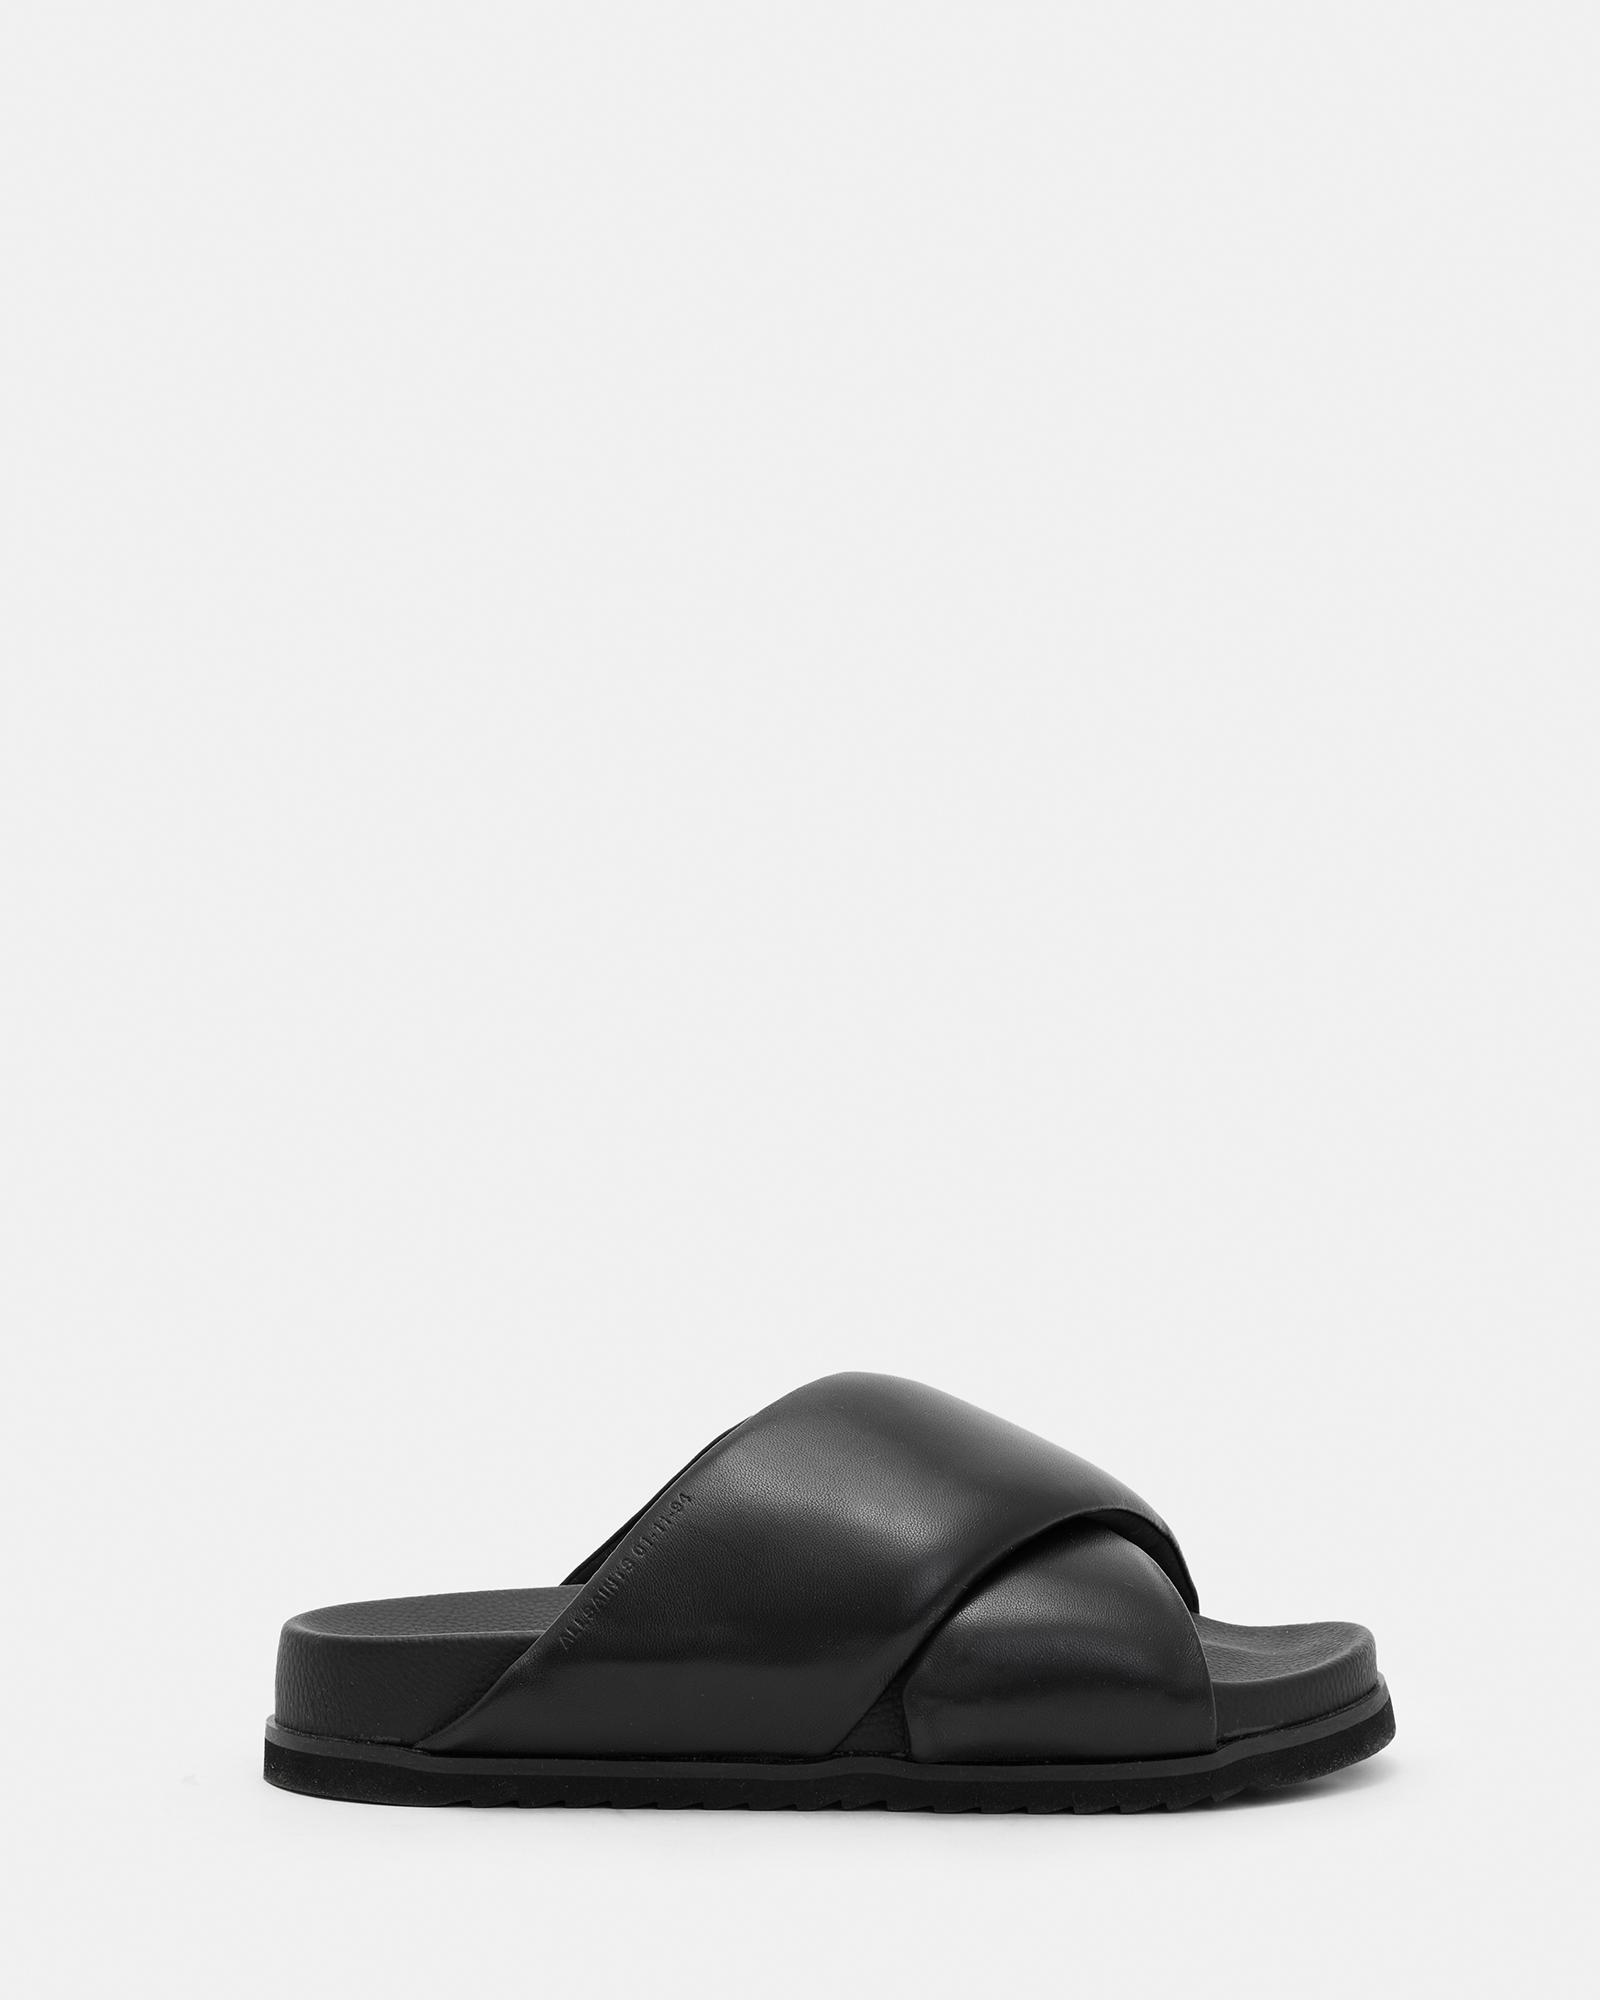 AllSaints Saki Leather Crossover Sandals,, Black